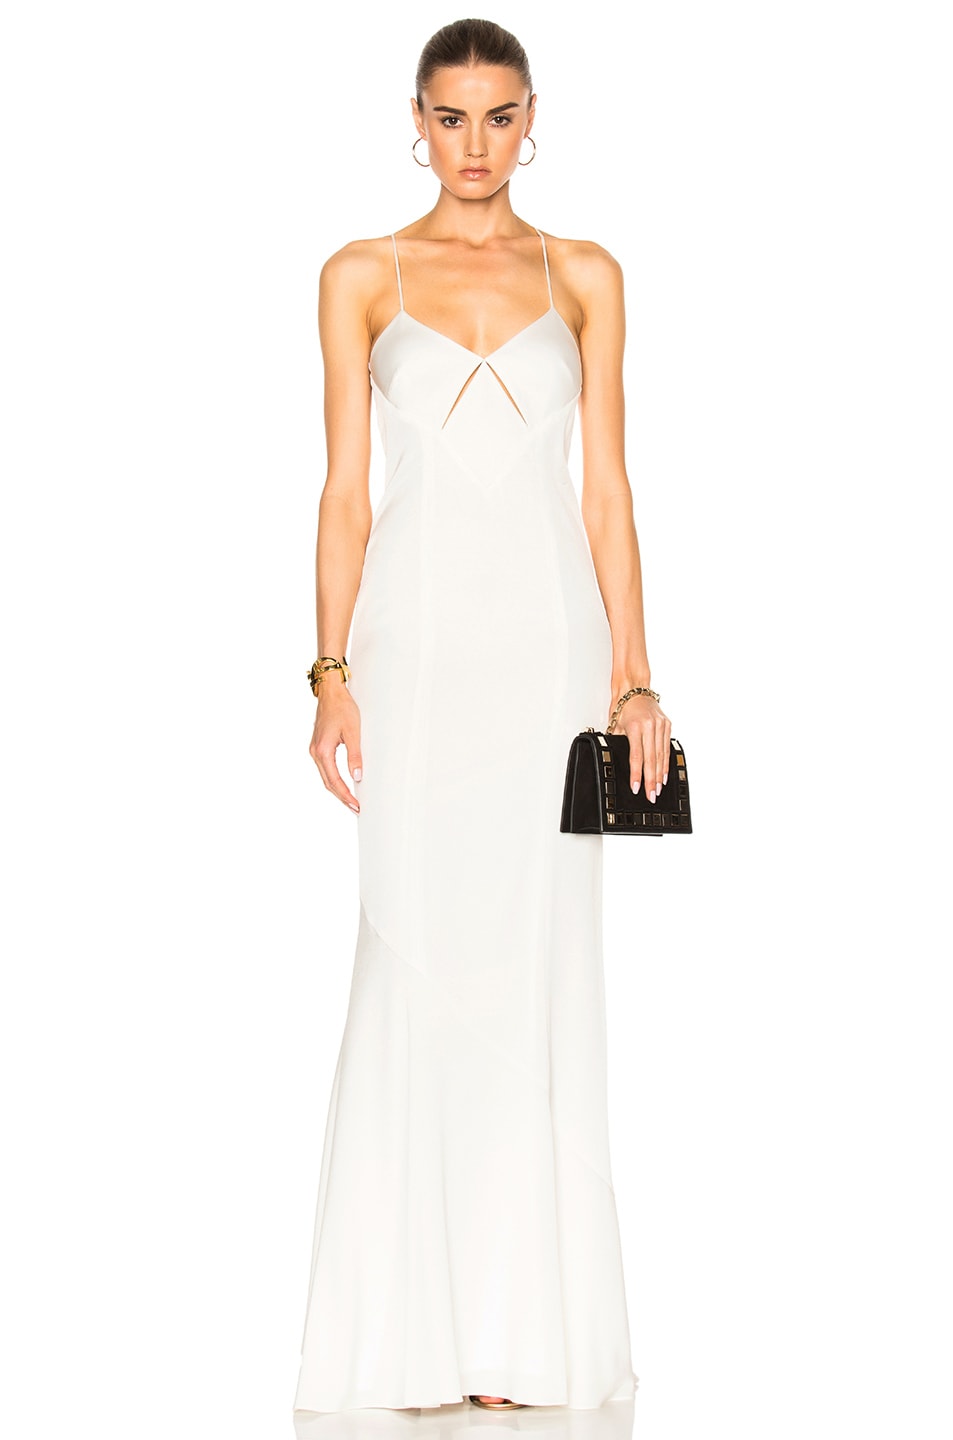 GALVAN for FWRD Slit Spaghetti Strap Dress in White | FWRD